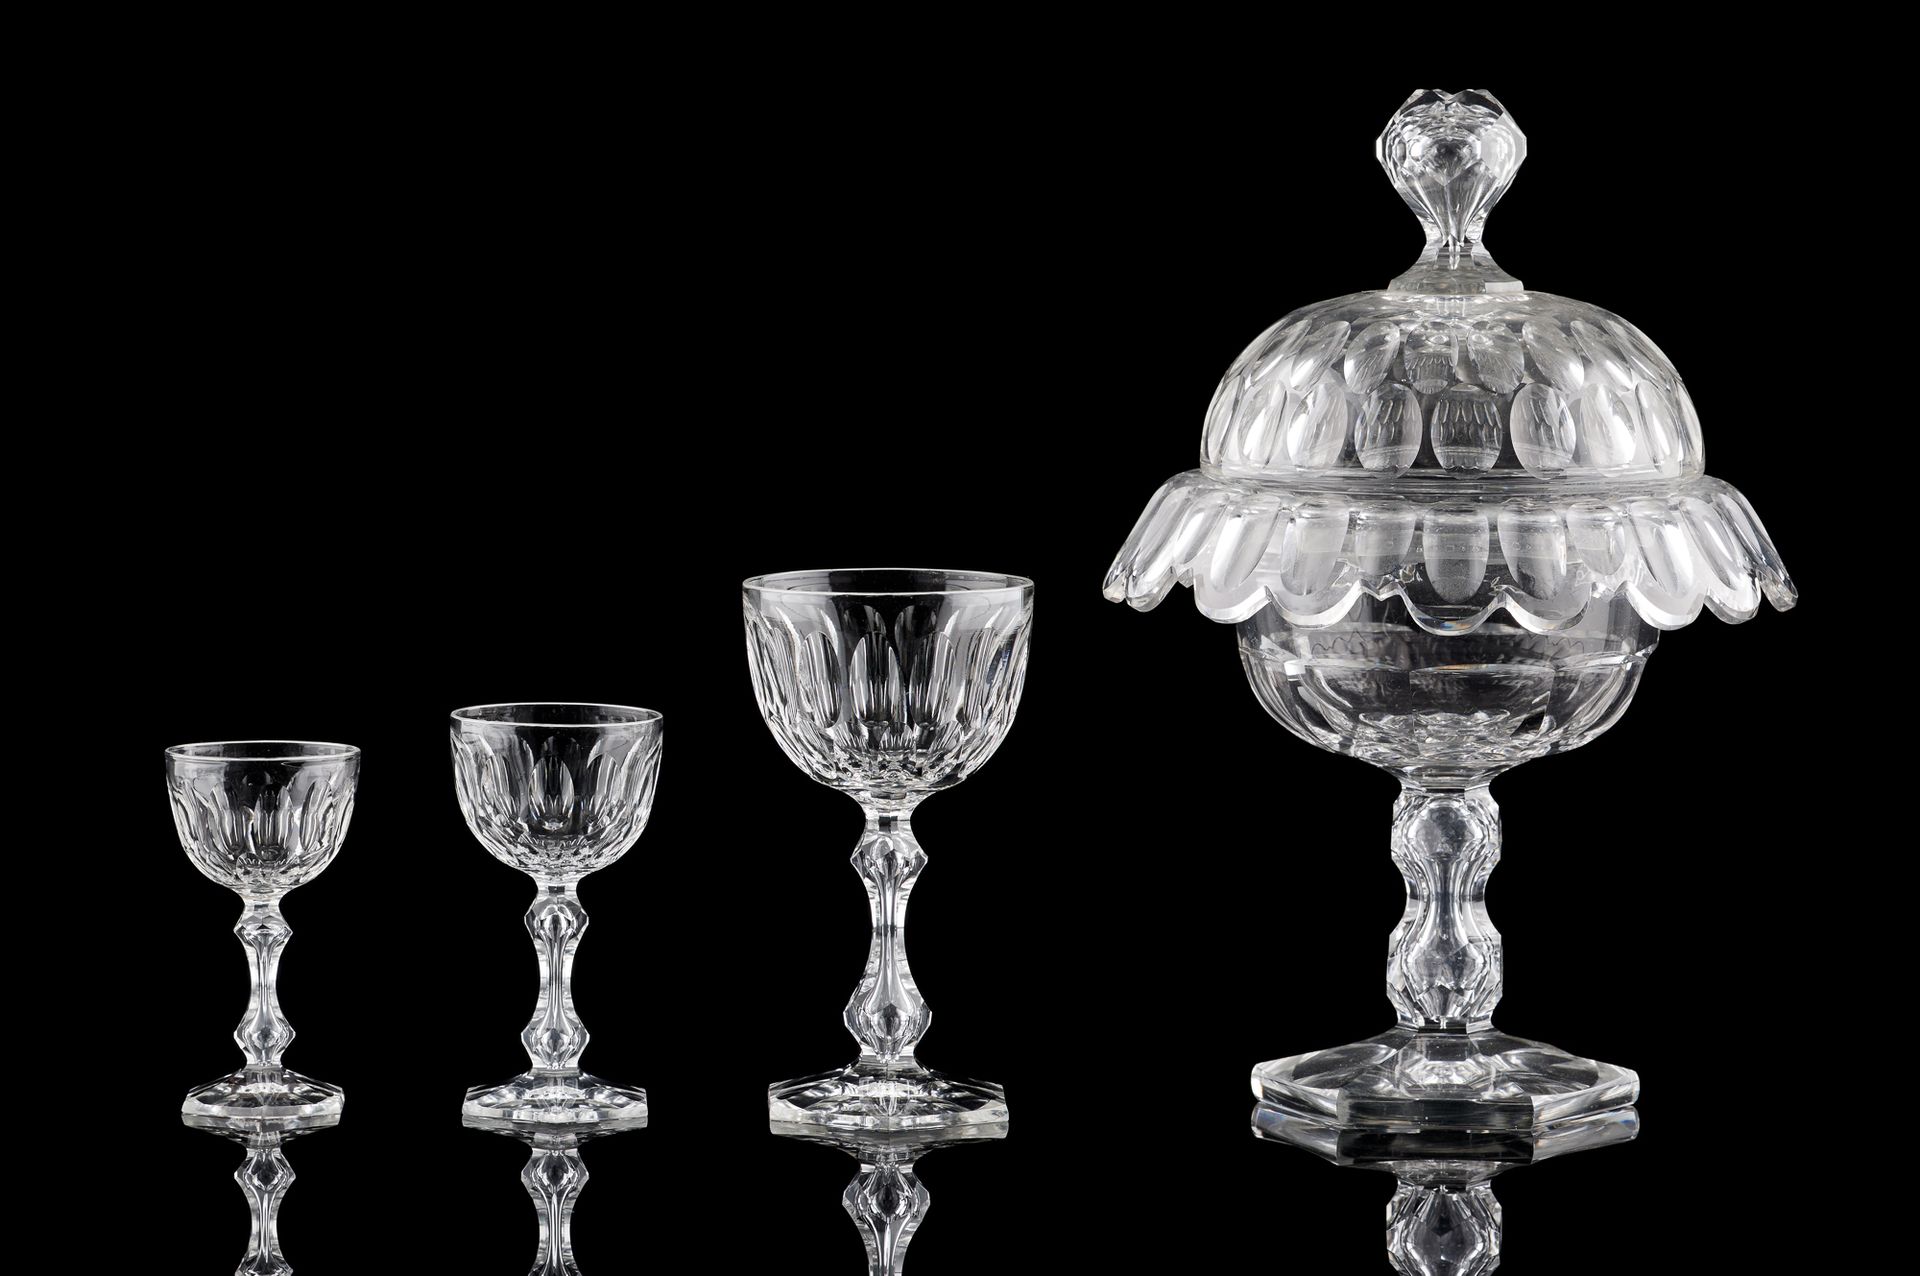 VAL SAINT LAMBERT. Glassware: A set of glasses, "Prince of Wales" model, in clea&hellip;